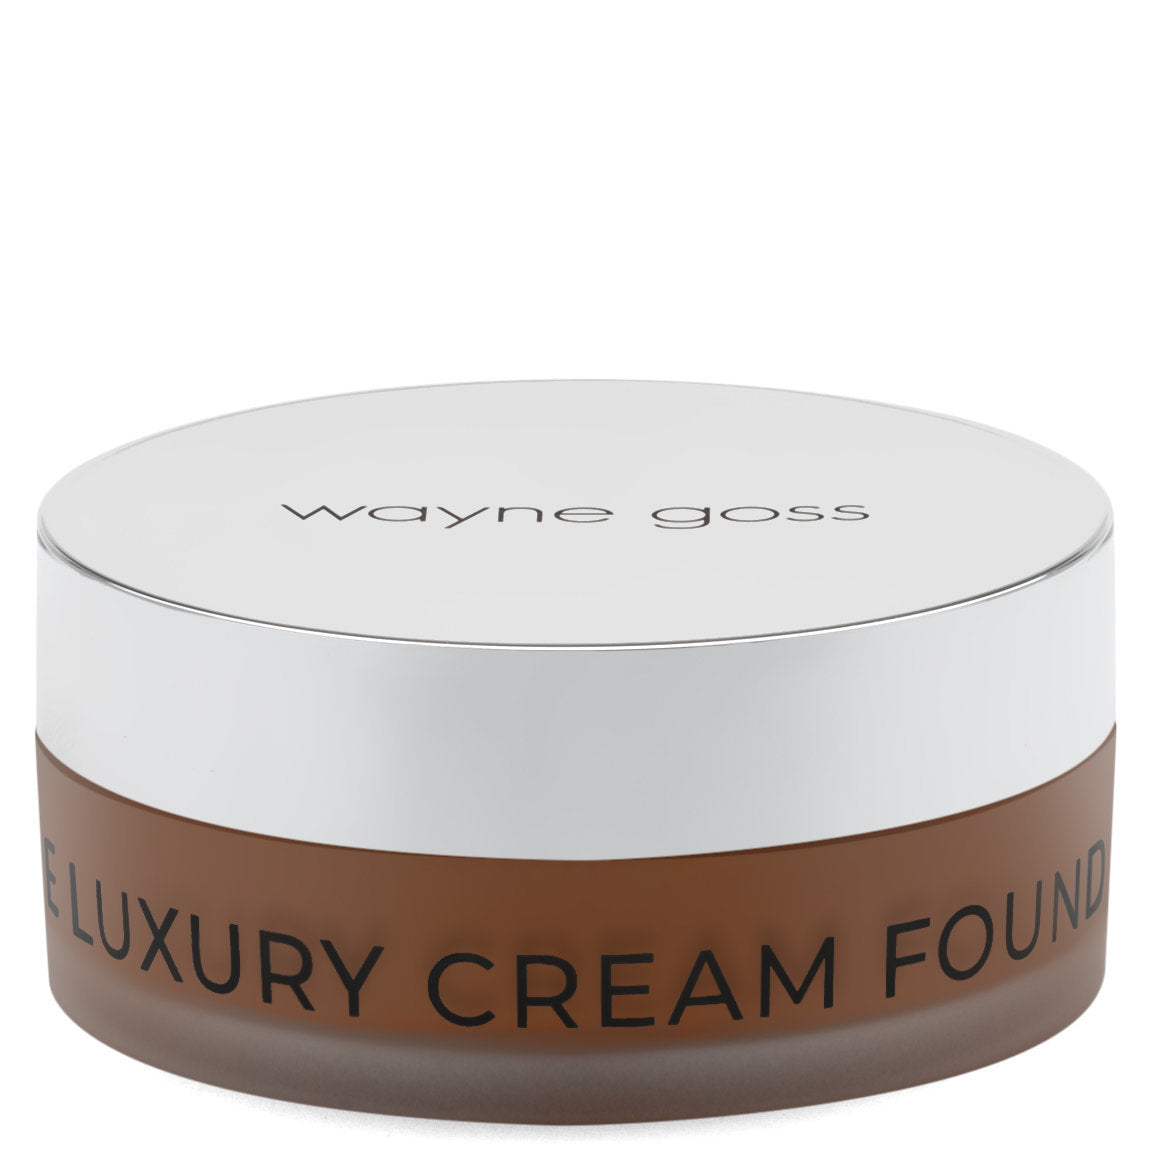 The Luxury Cream Foundation - Shade 02